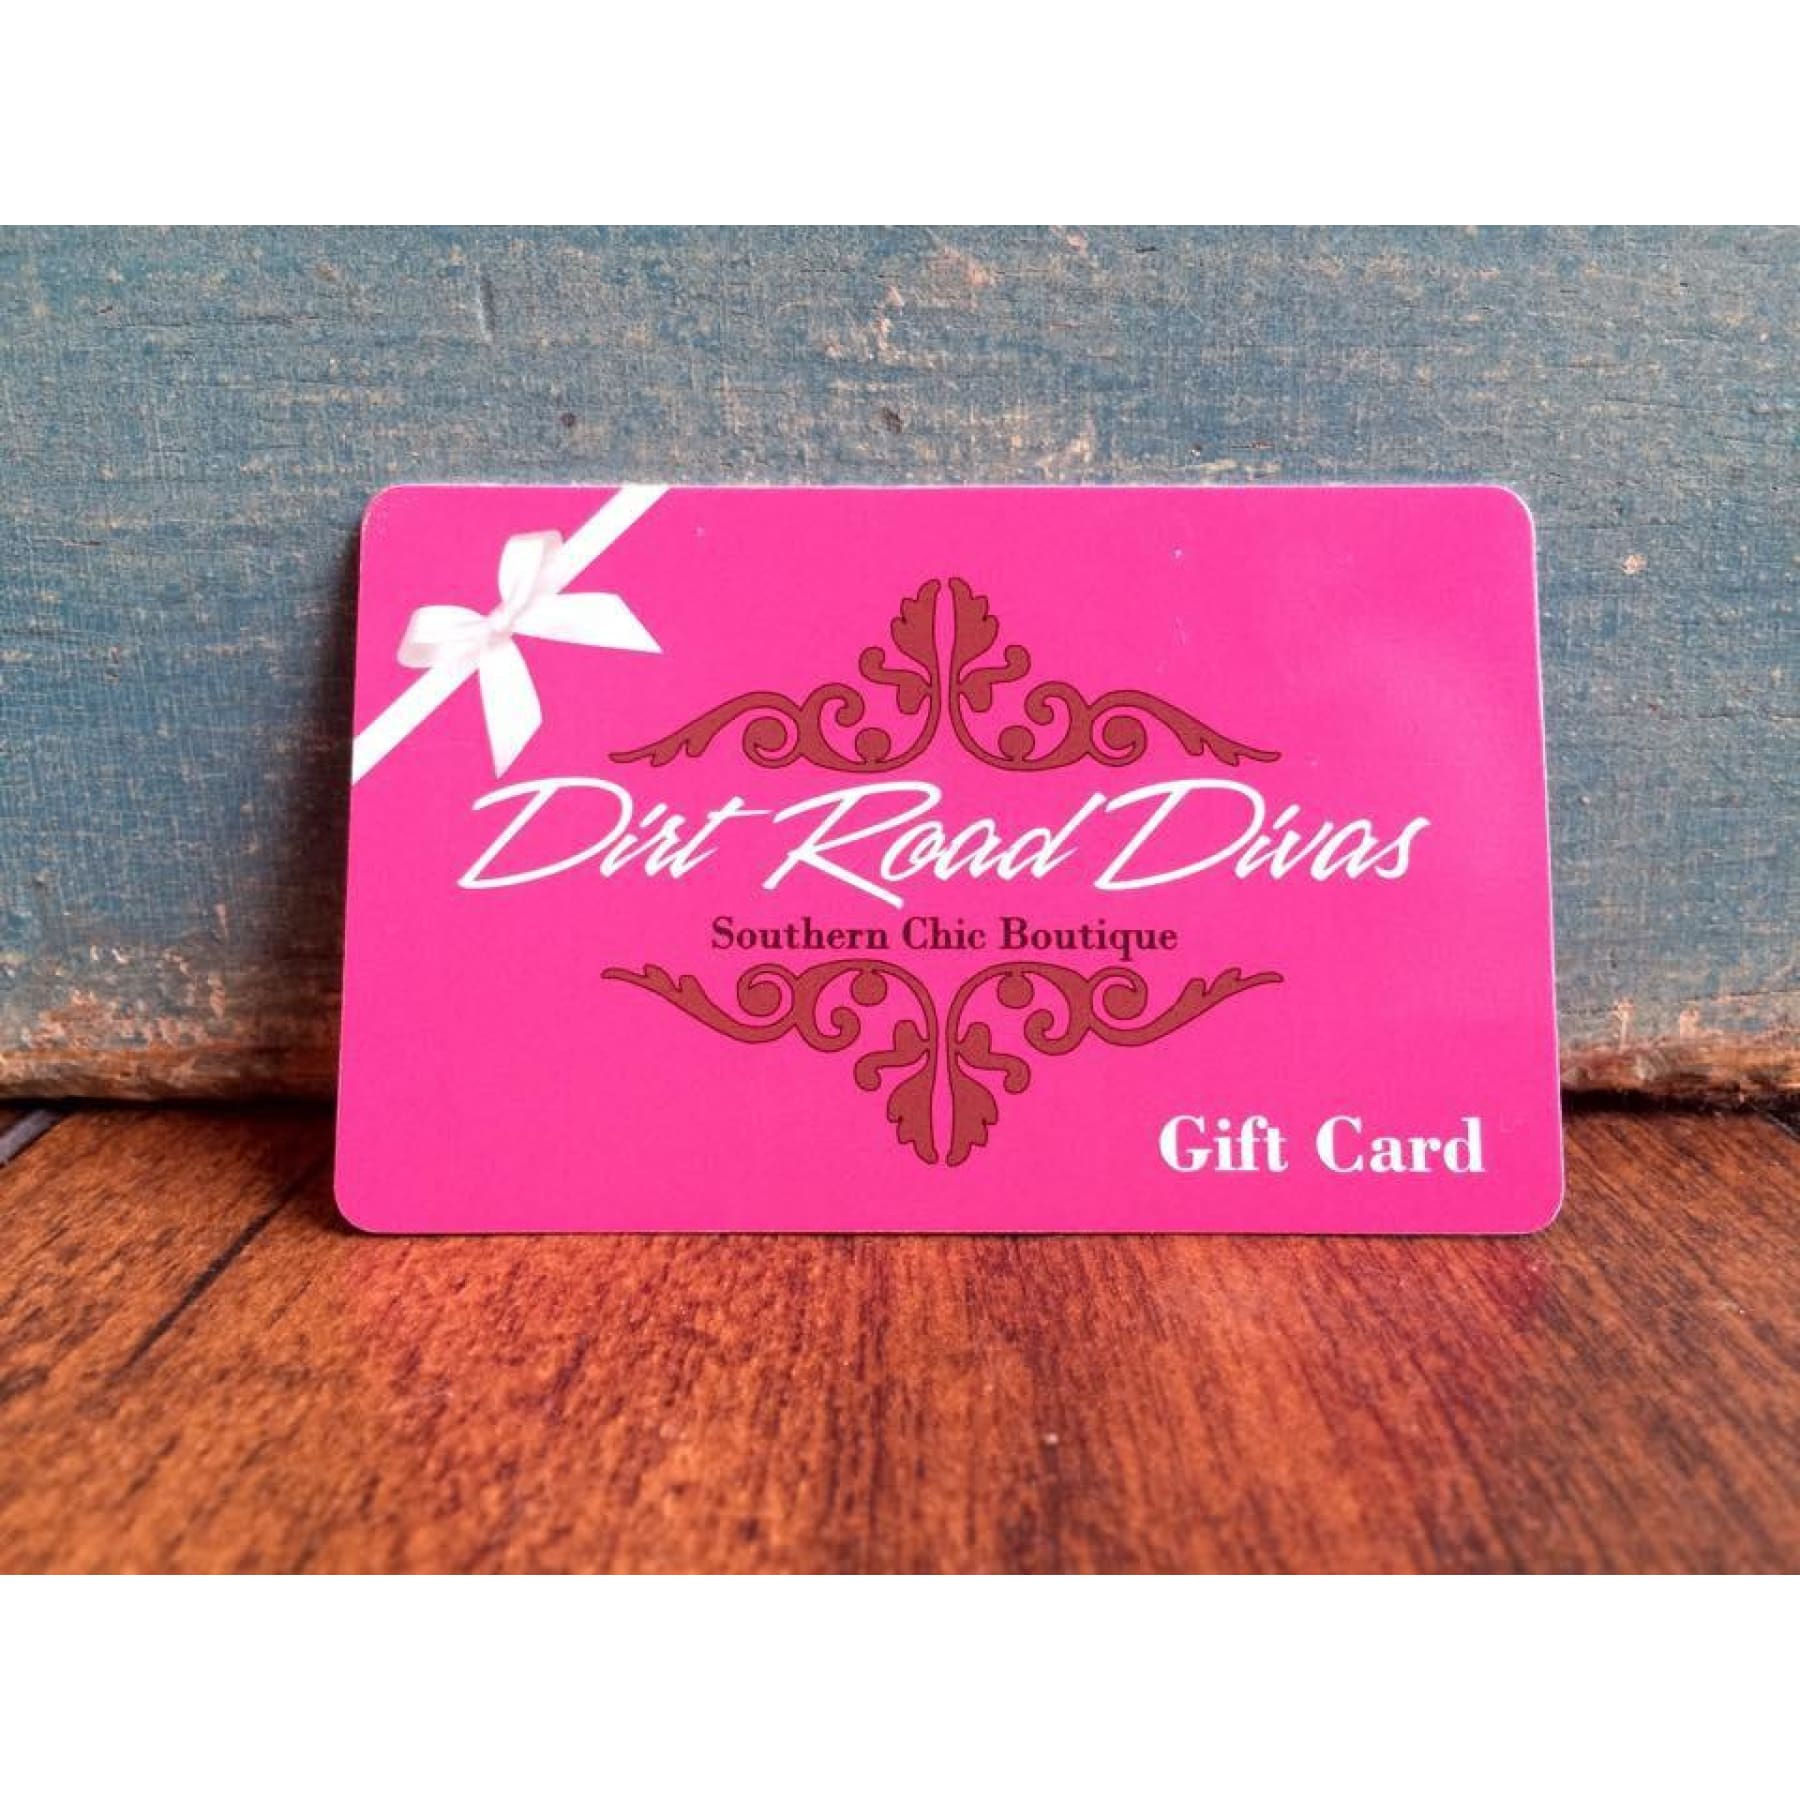 ukrudtsplante stål Ed Dirt Road Divas Gift Card $100.00 – Dirt Road Divas Boutique